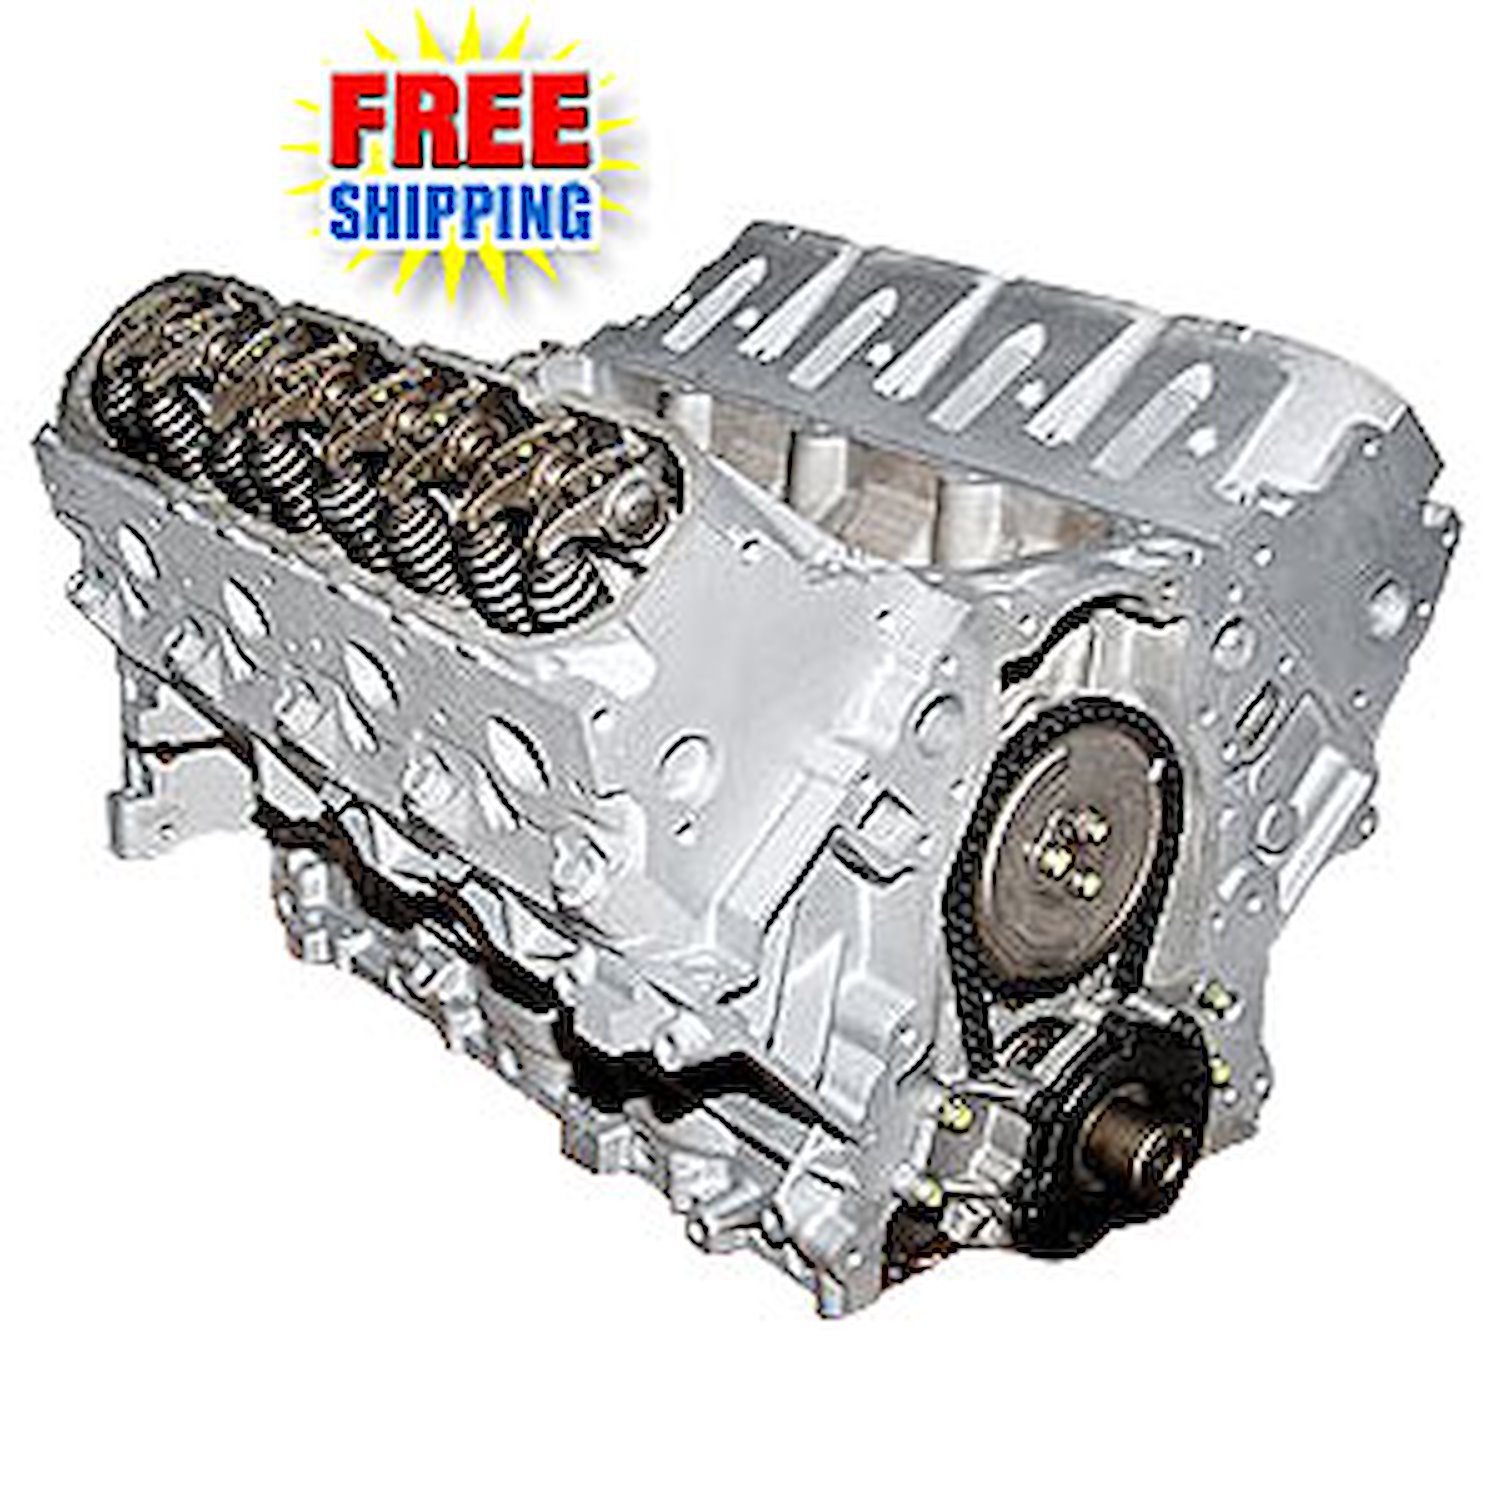 GM Aluminum LS1 Engine 345HP/350TQ